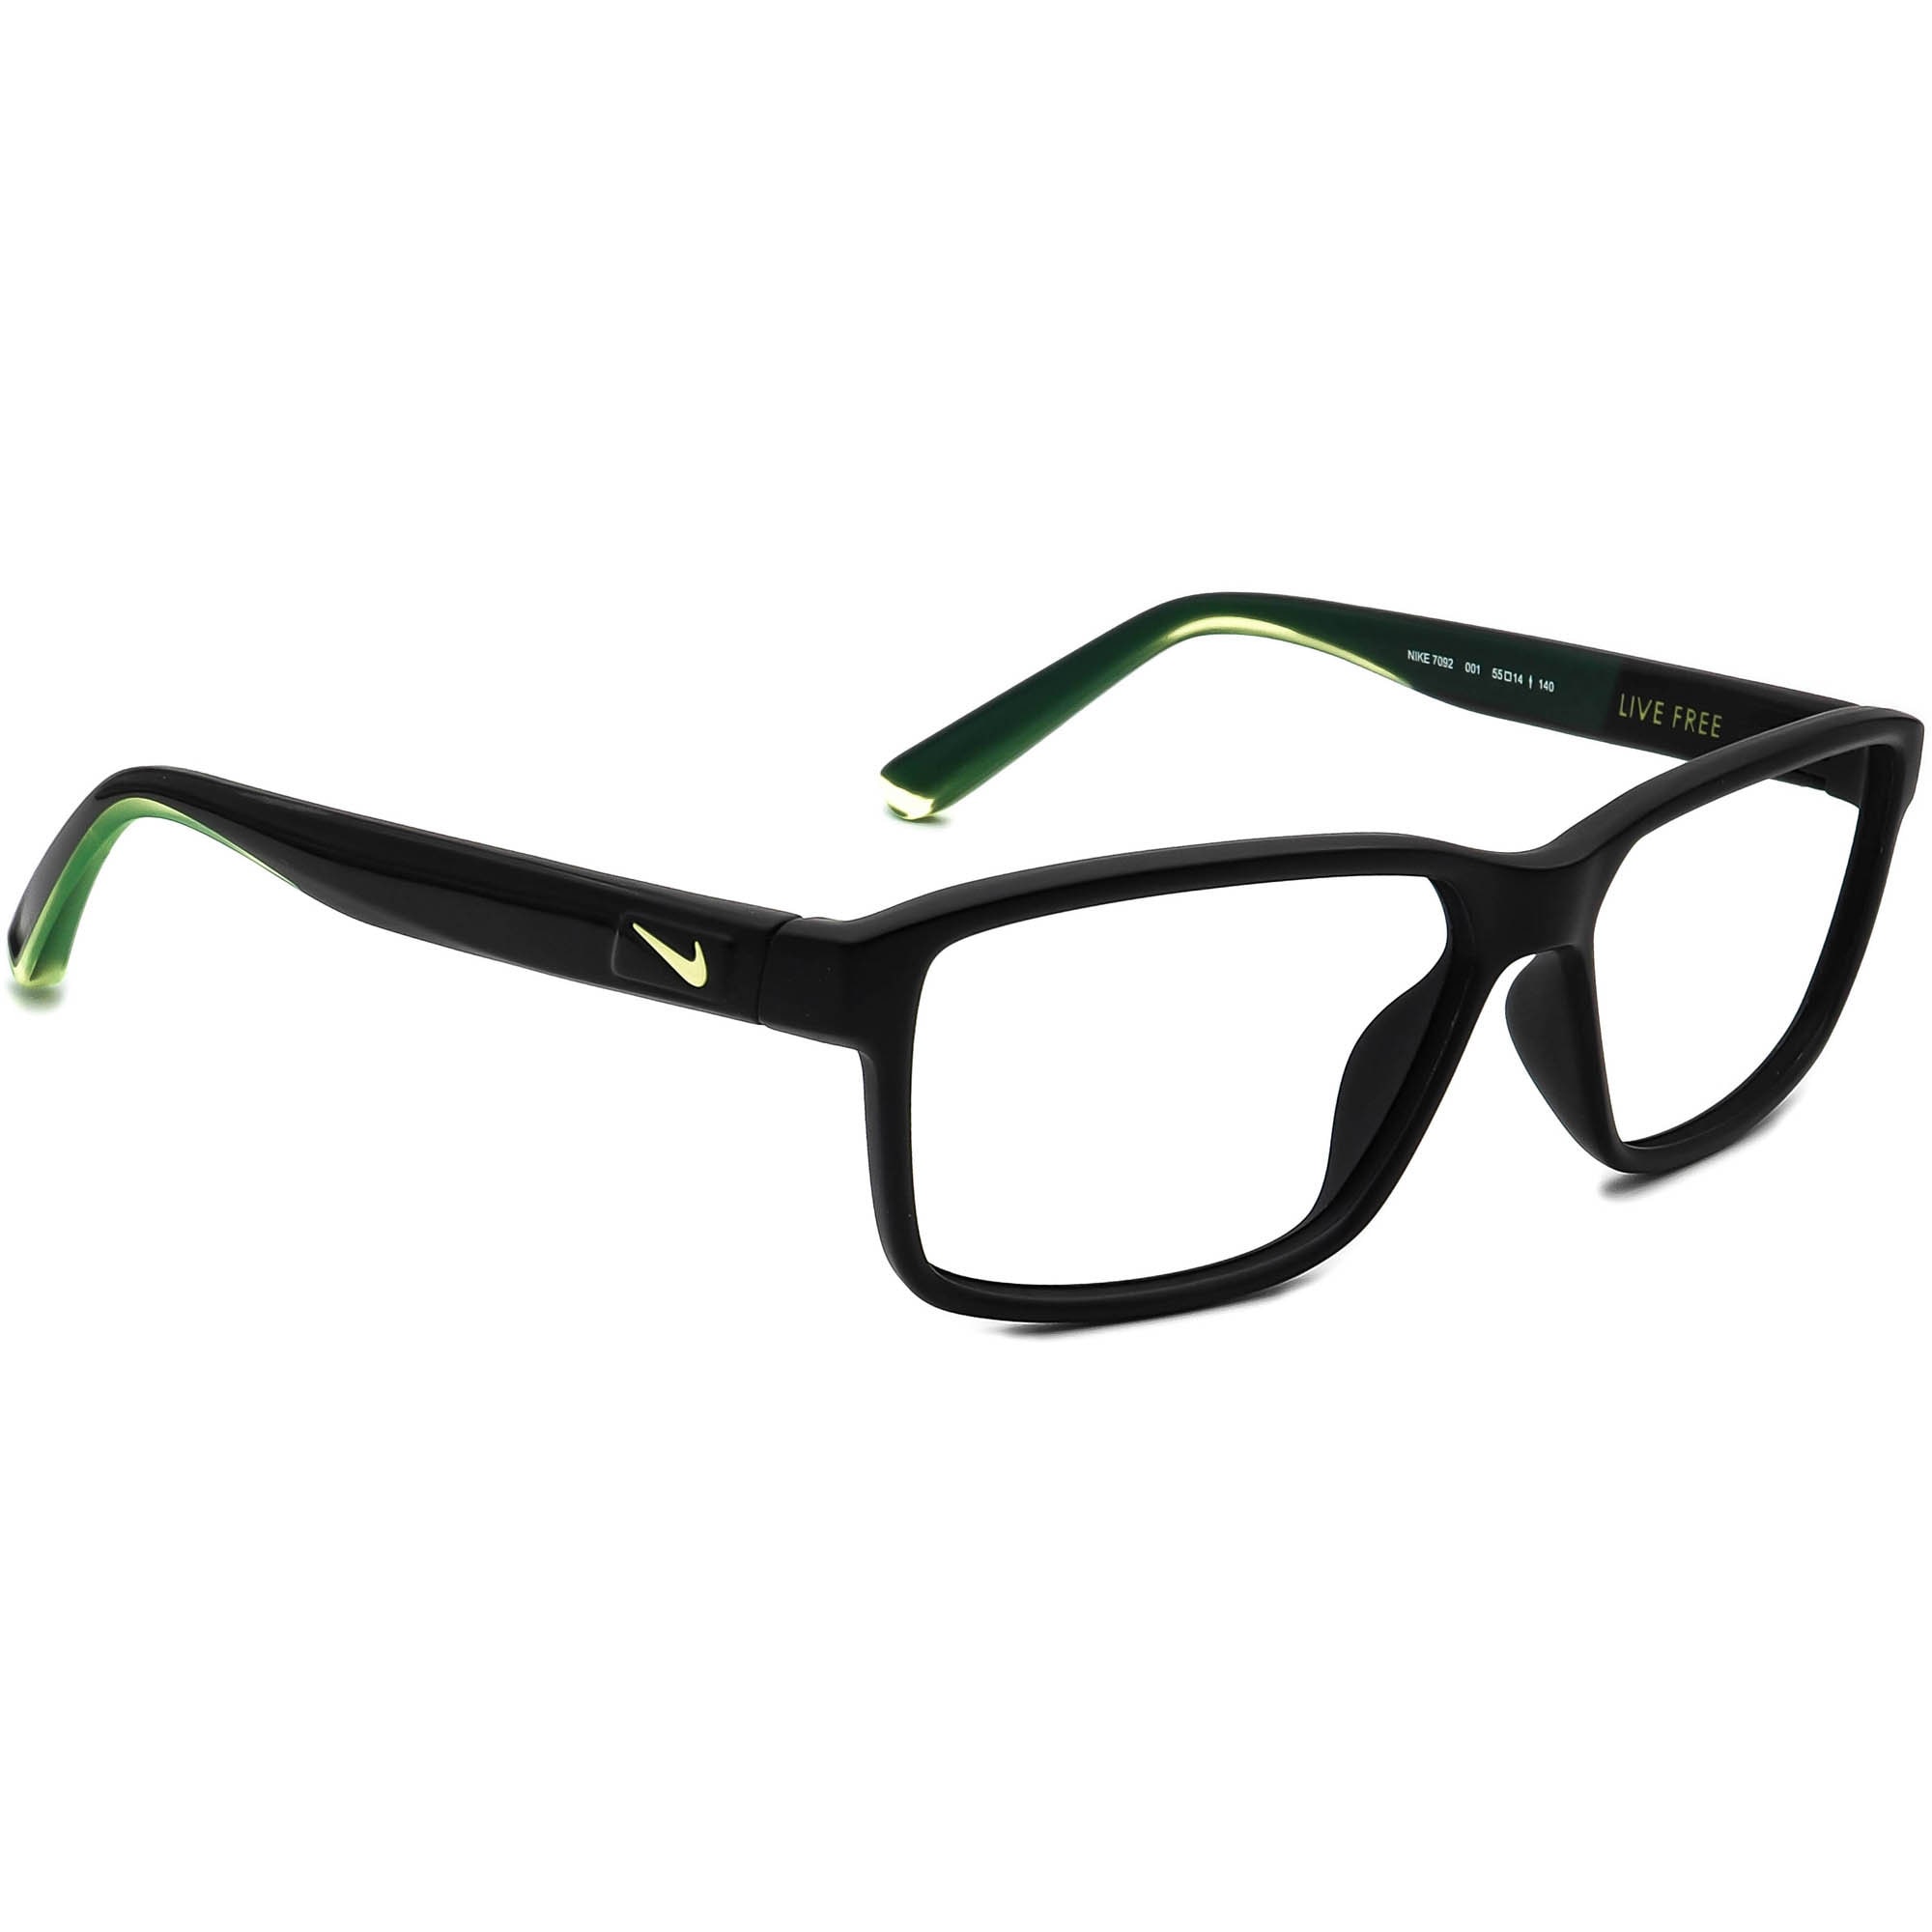 Nike Eyeglasses 001 Live Free Black & Green Rectangular - Etsy